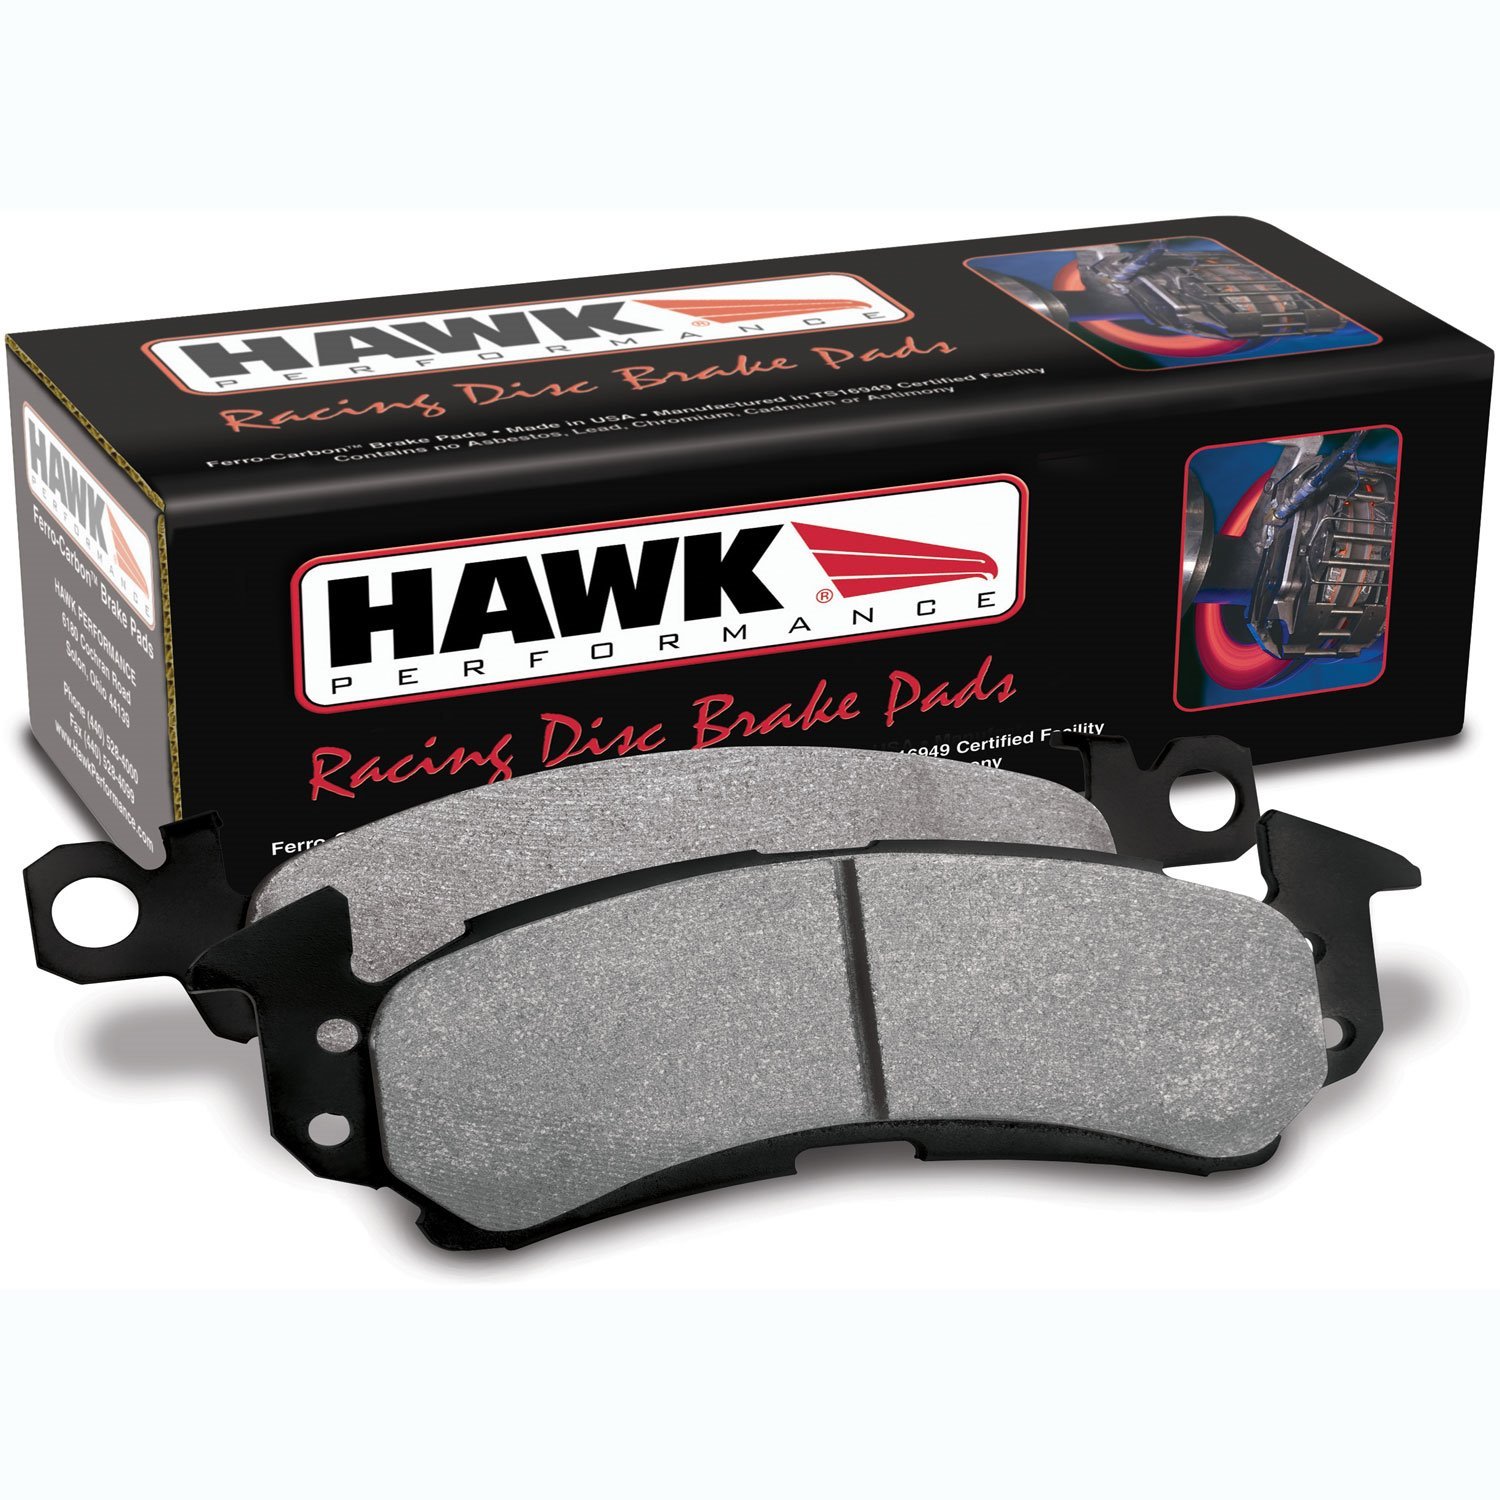 Disc Brake Pad HP Plus w/0.539 Thickness